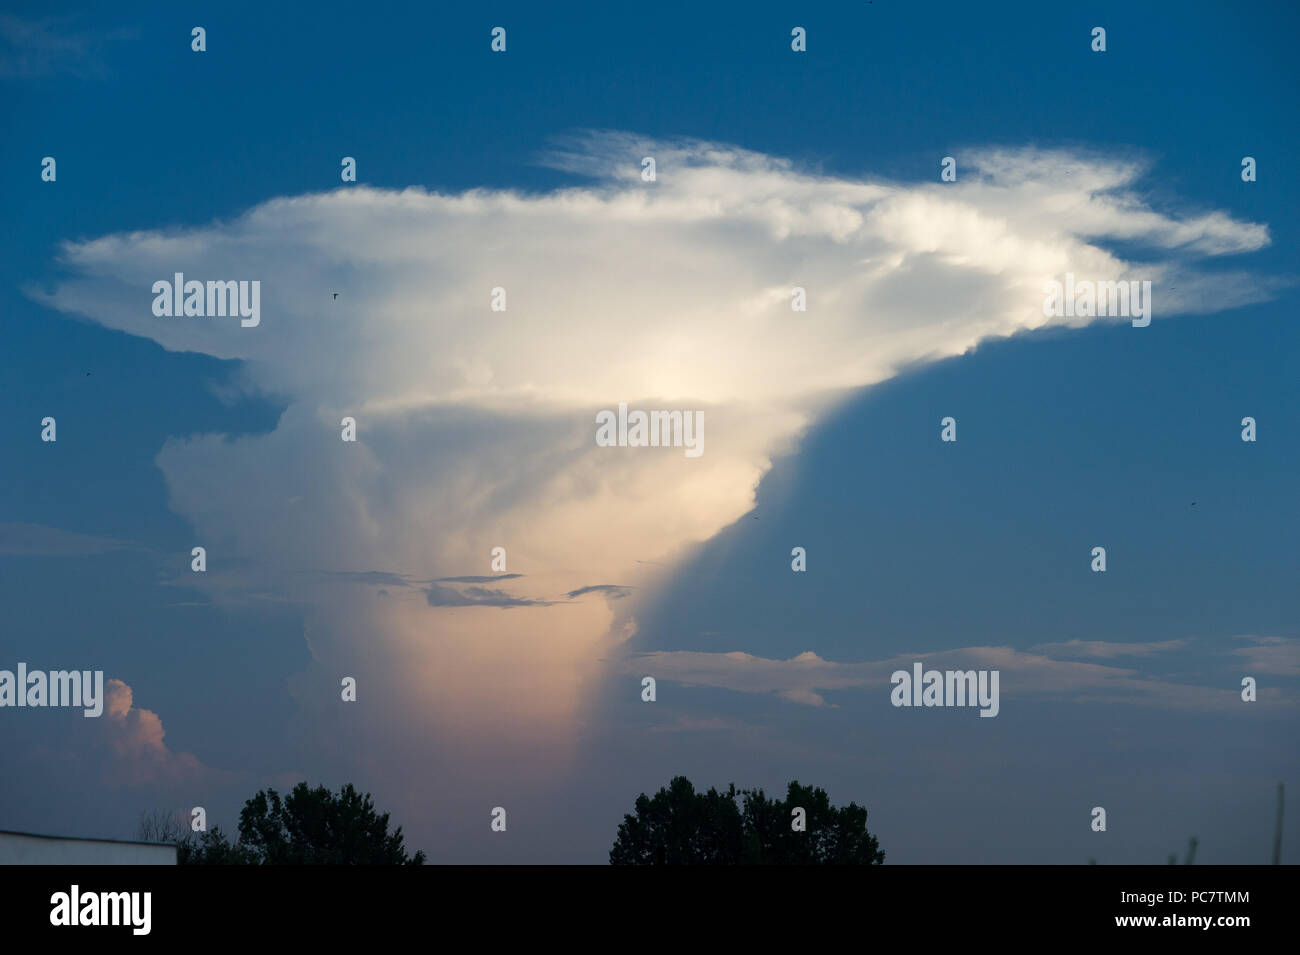 Cumulonimbus cloud in Gdansk, Poland. July 28th 2018 © Wojciech Strozyk / Alamy Stock Photo Stock Photo